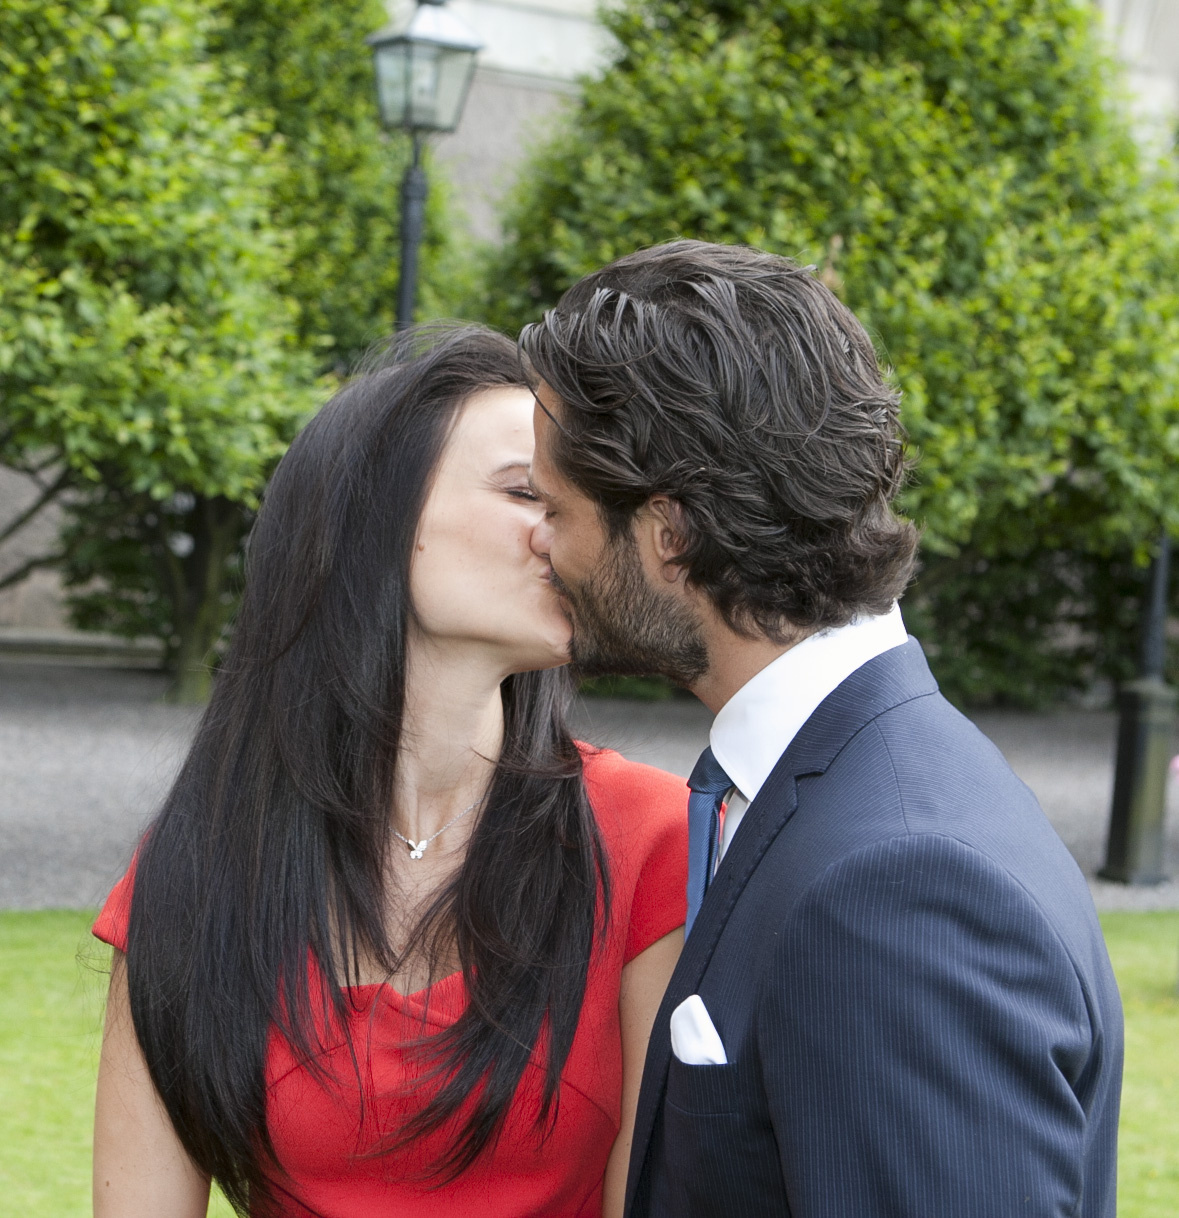 Turturduvorna. Sofia pussas med sin prins. 